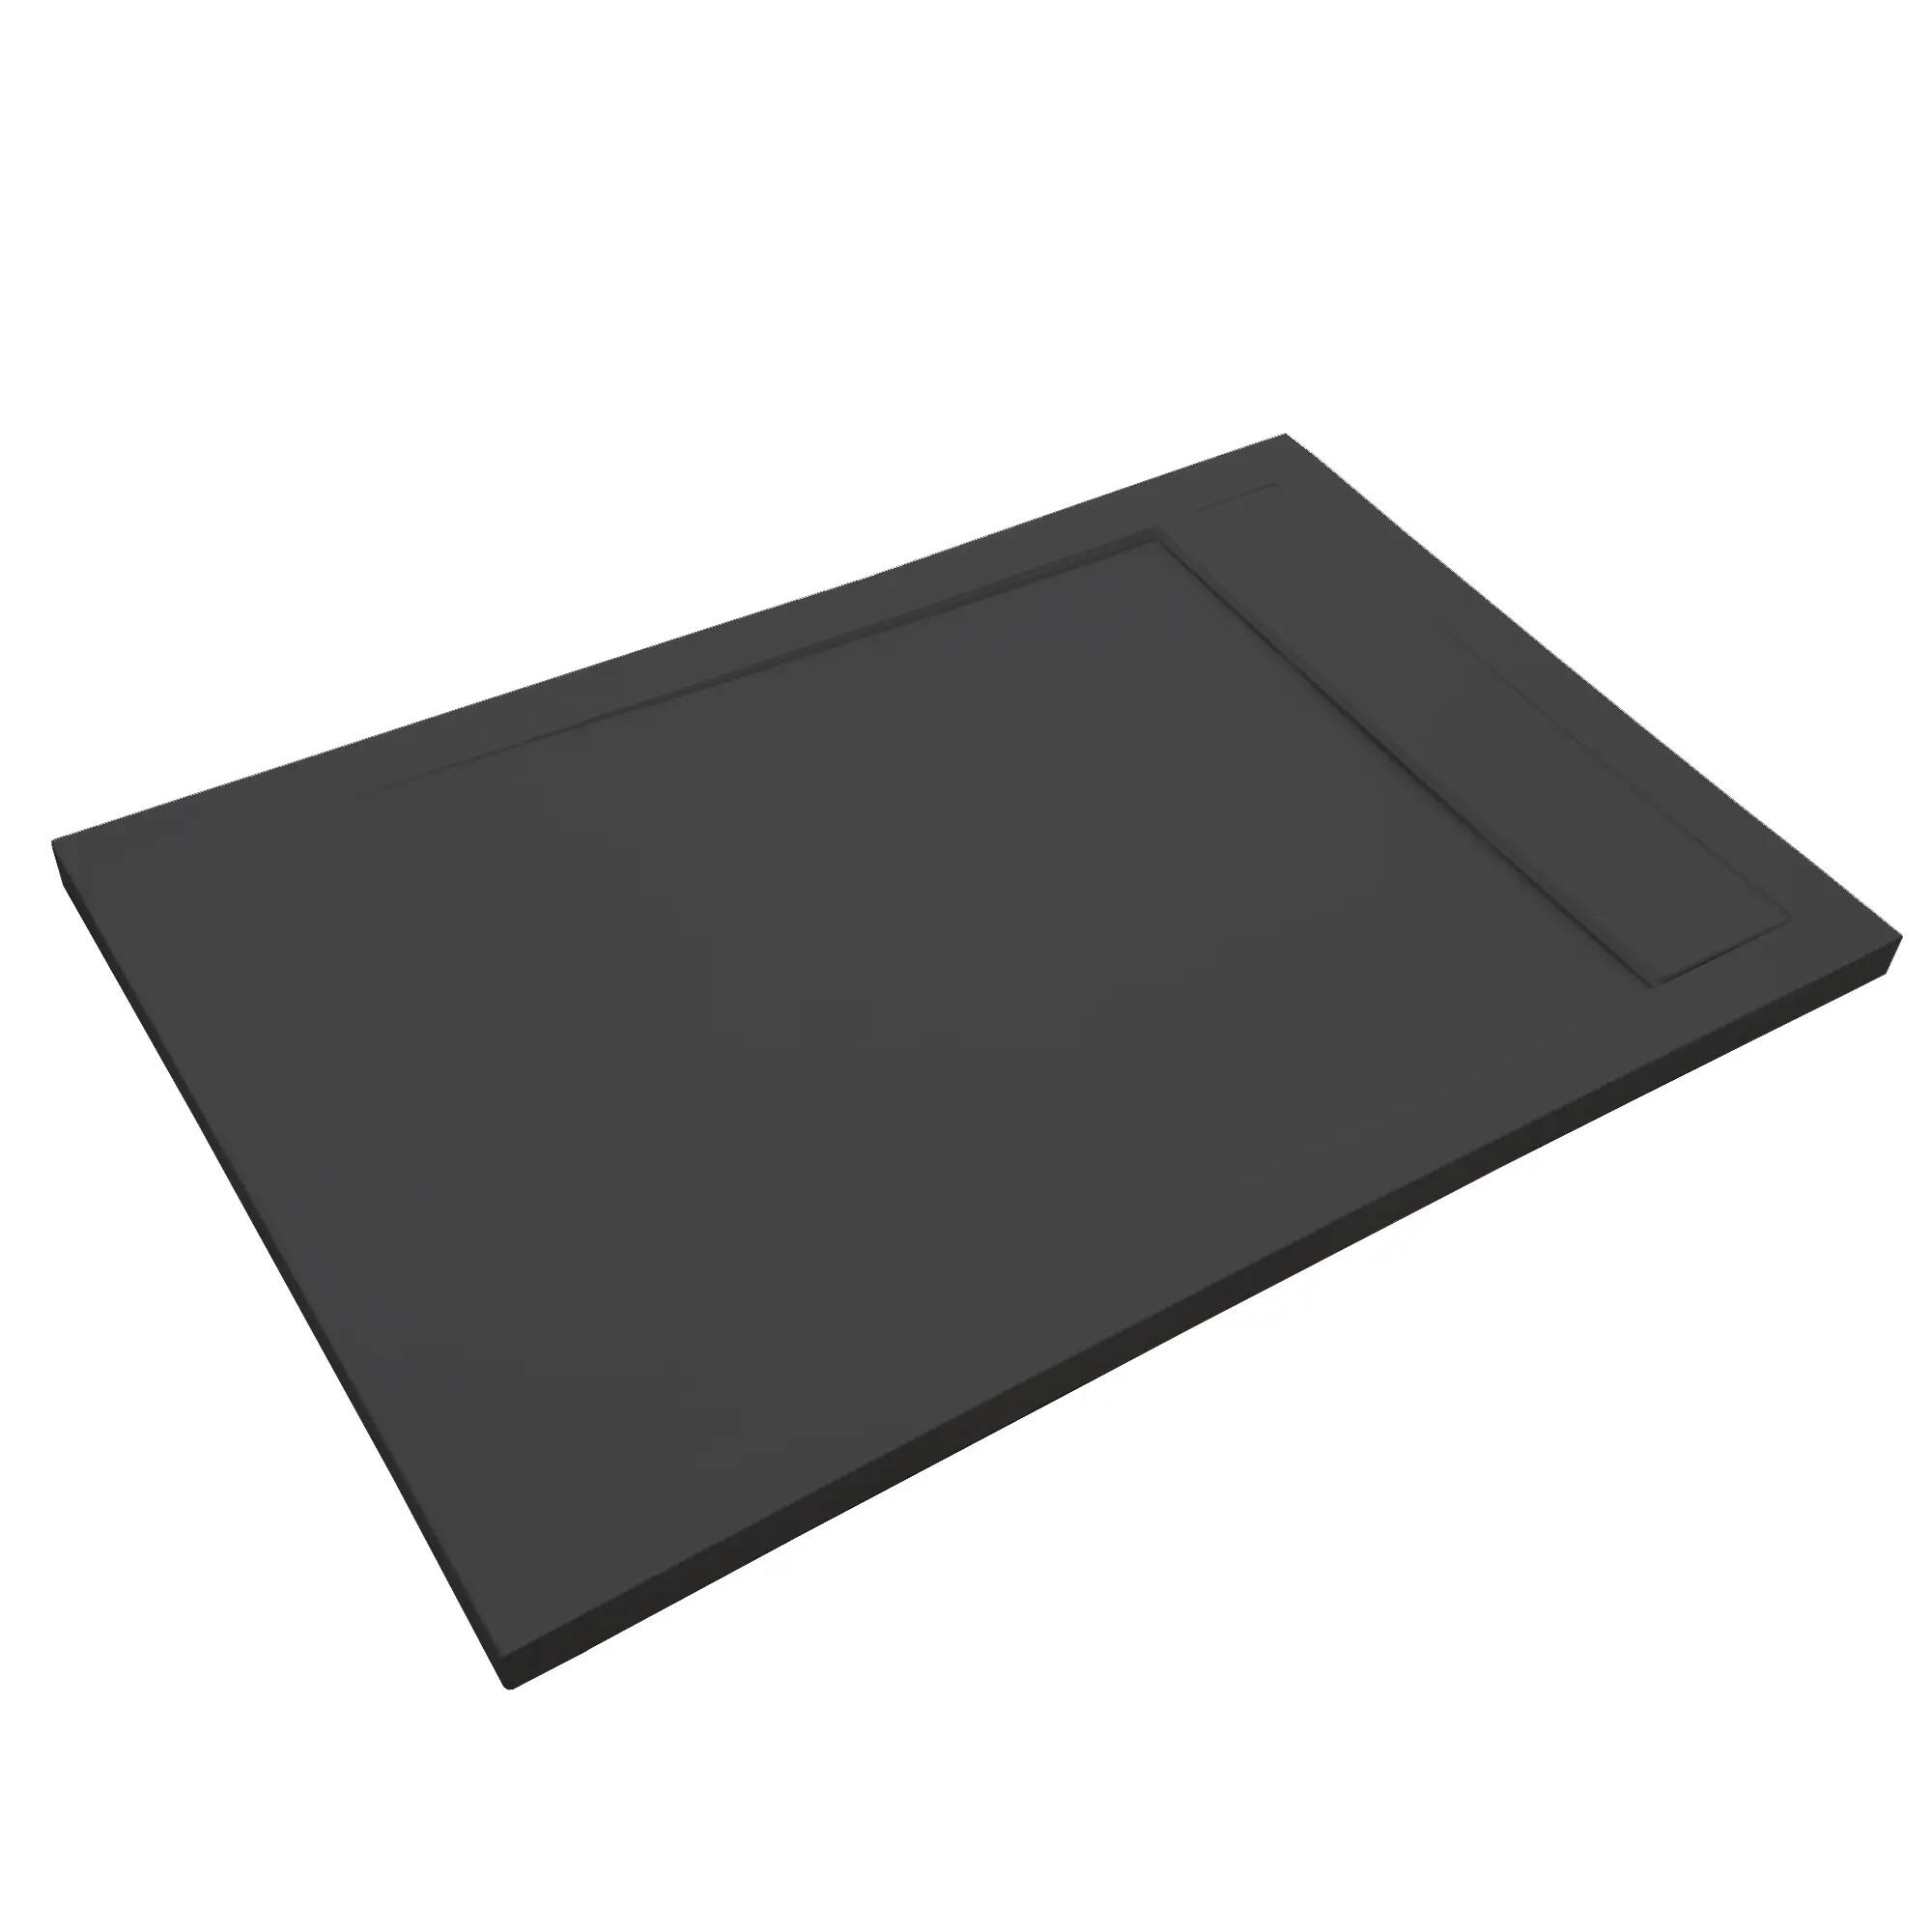 Plato de ducha new york 140x70 cm negro